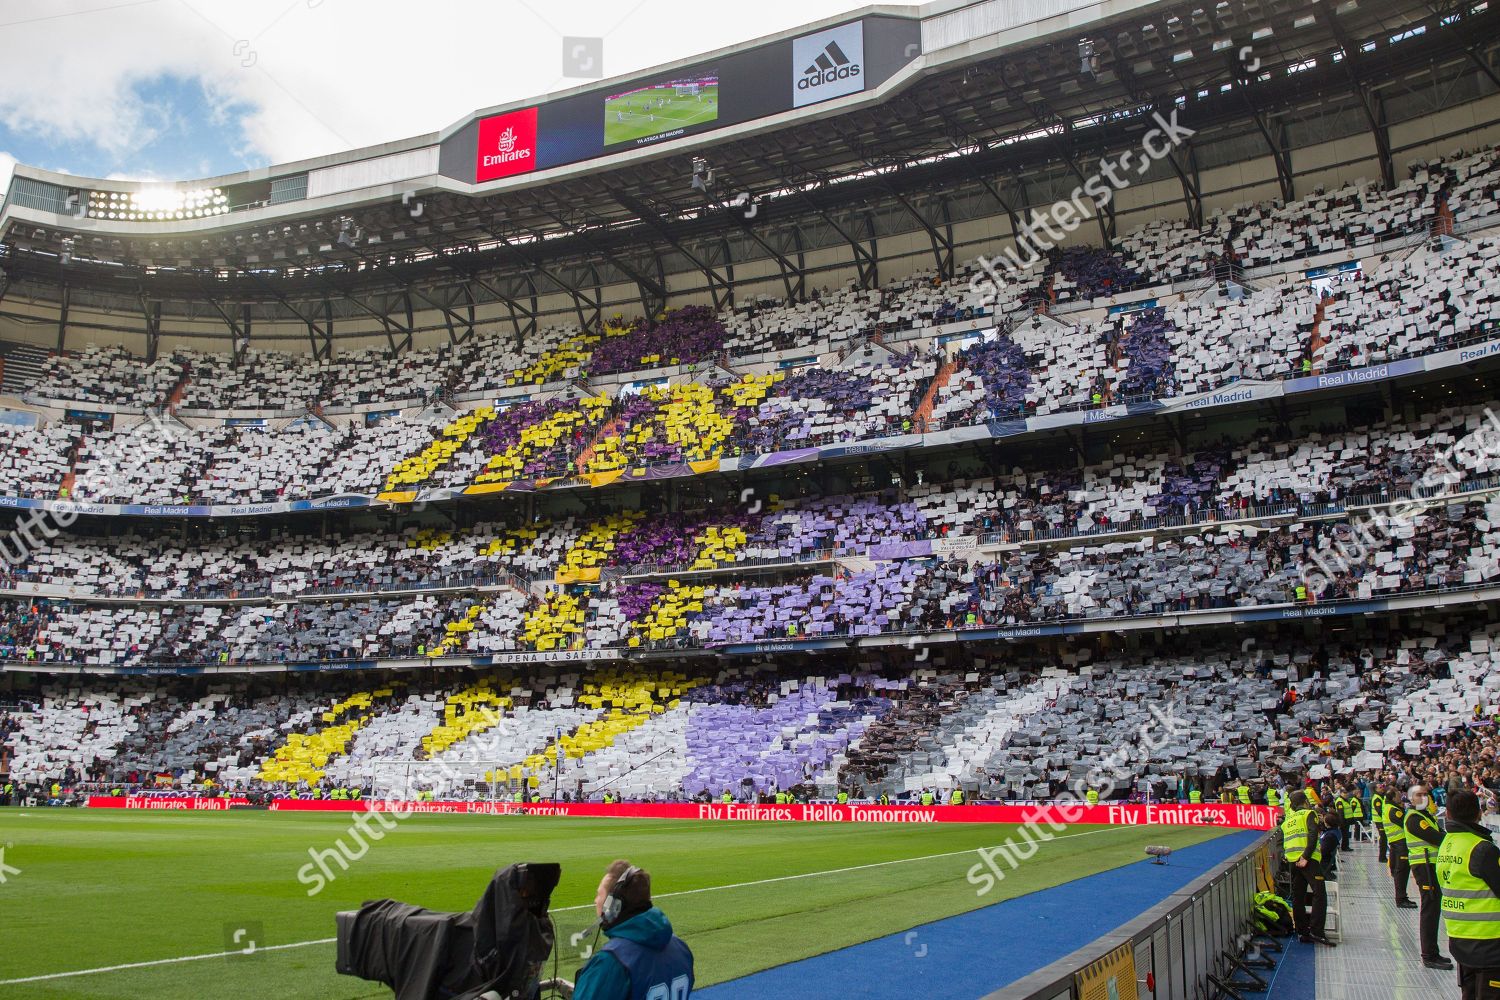 Real Madrid Fans During La Liga - de stock de contenido editorial: imagen de stock | Shutterstock